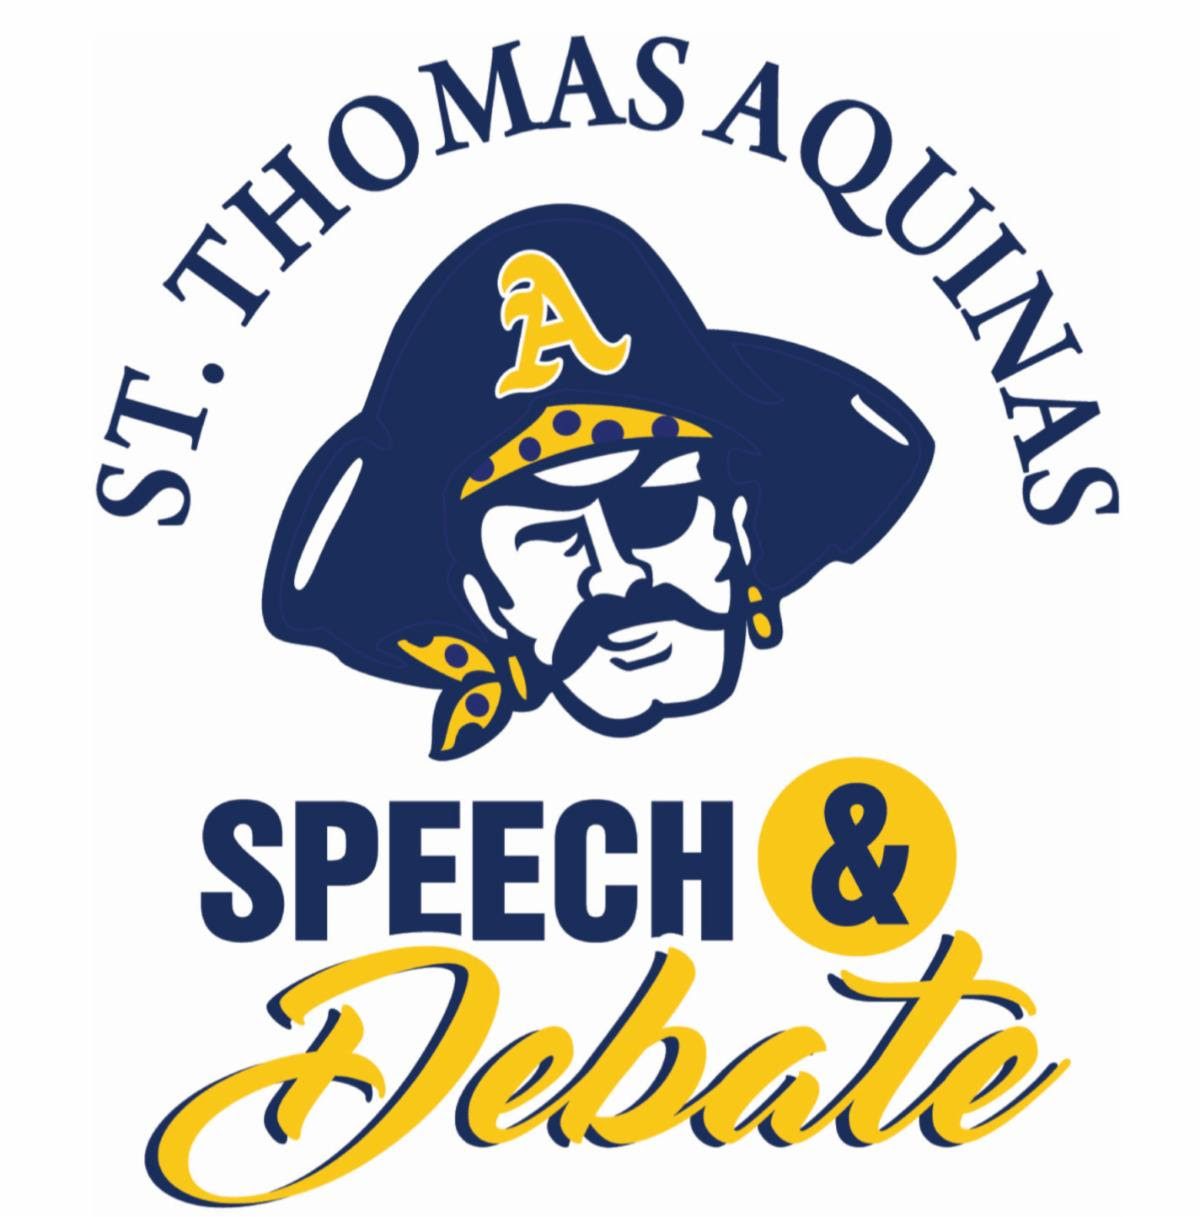 St. Thomas Aquinas High School Forensics Team